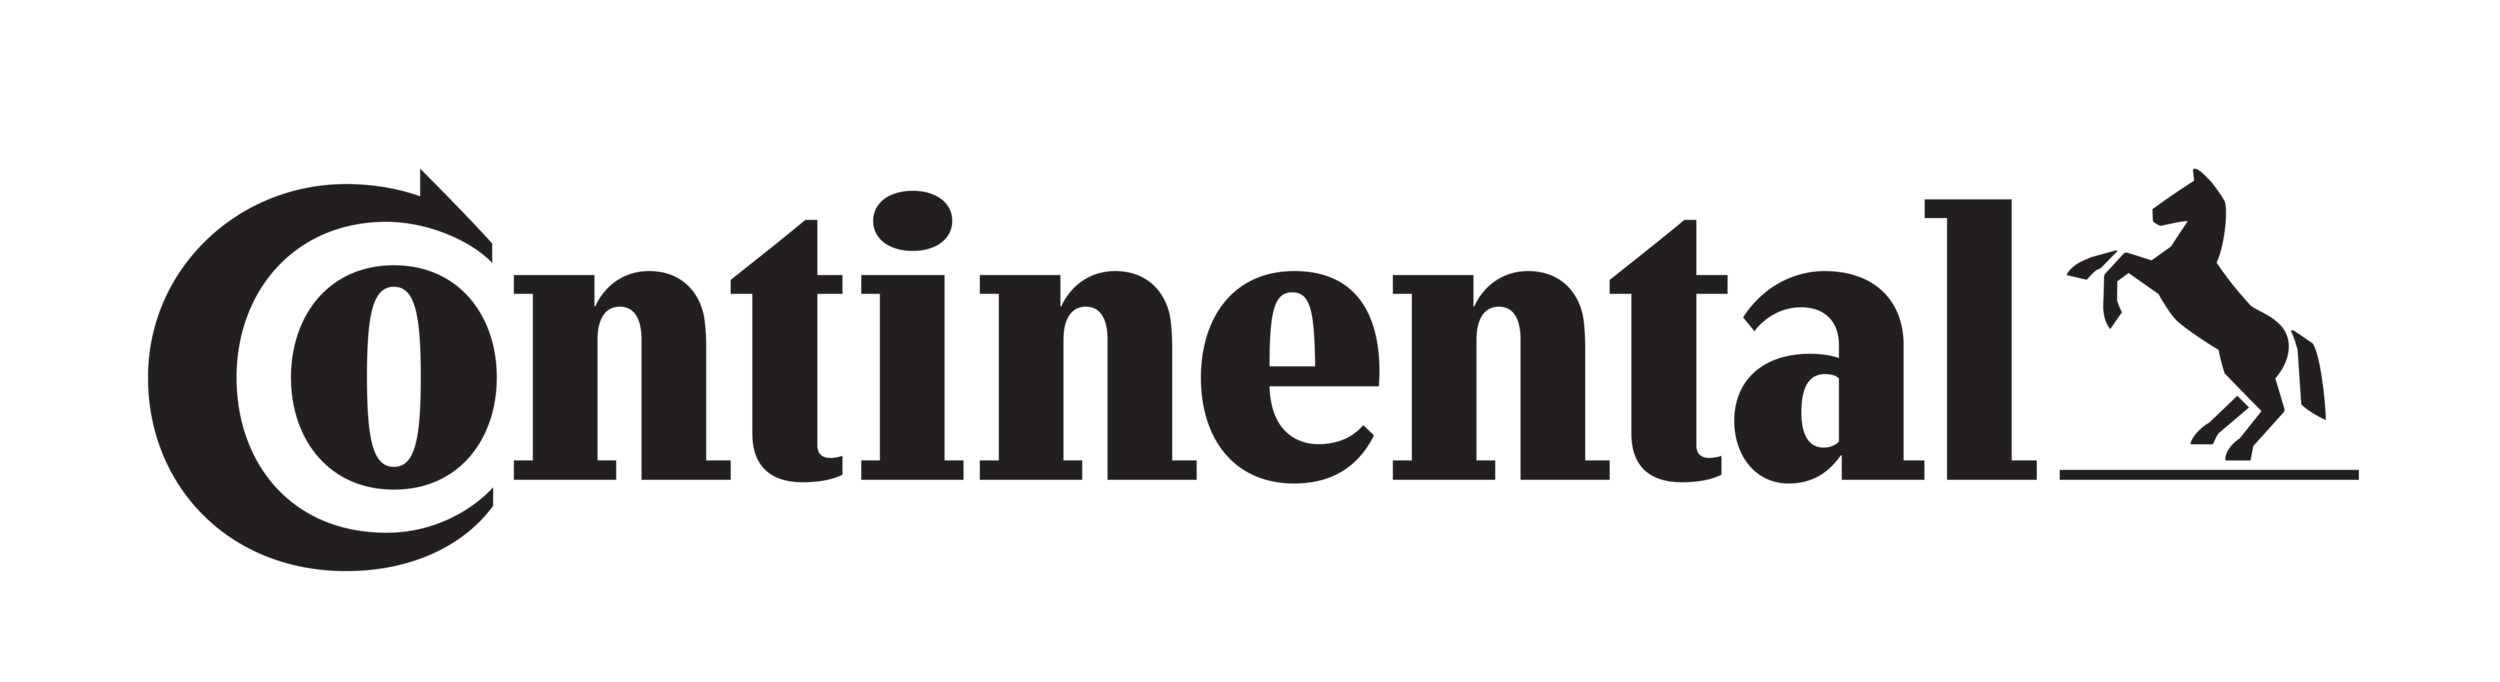 continental-logo-black.png